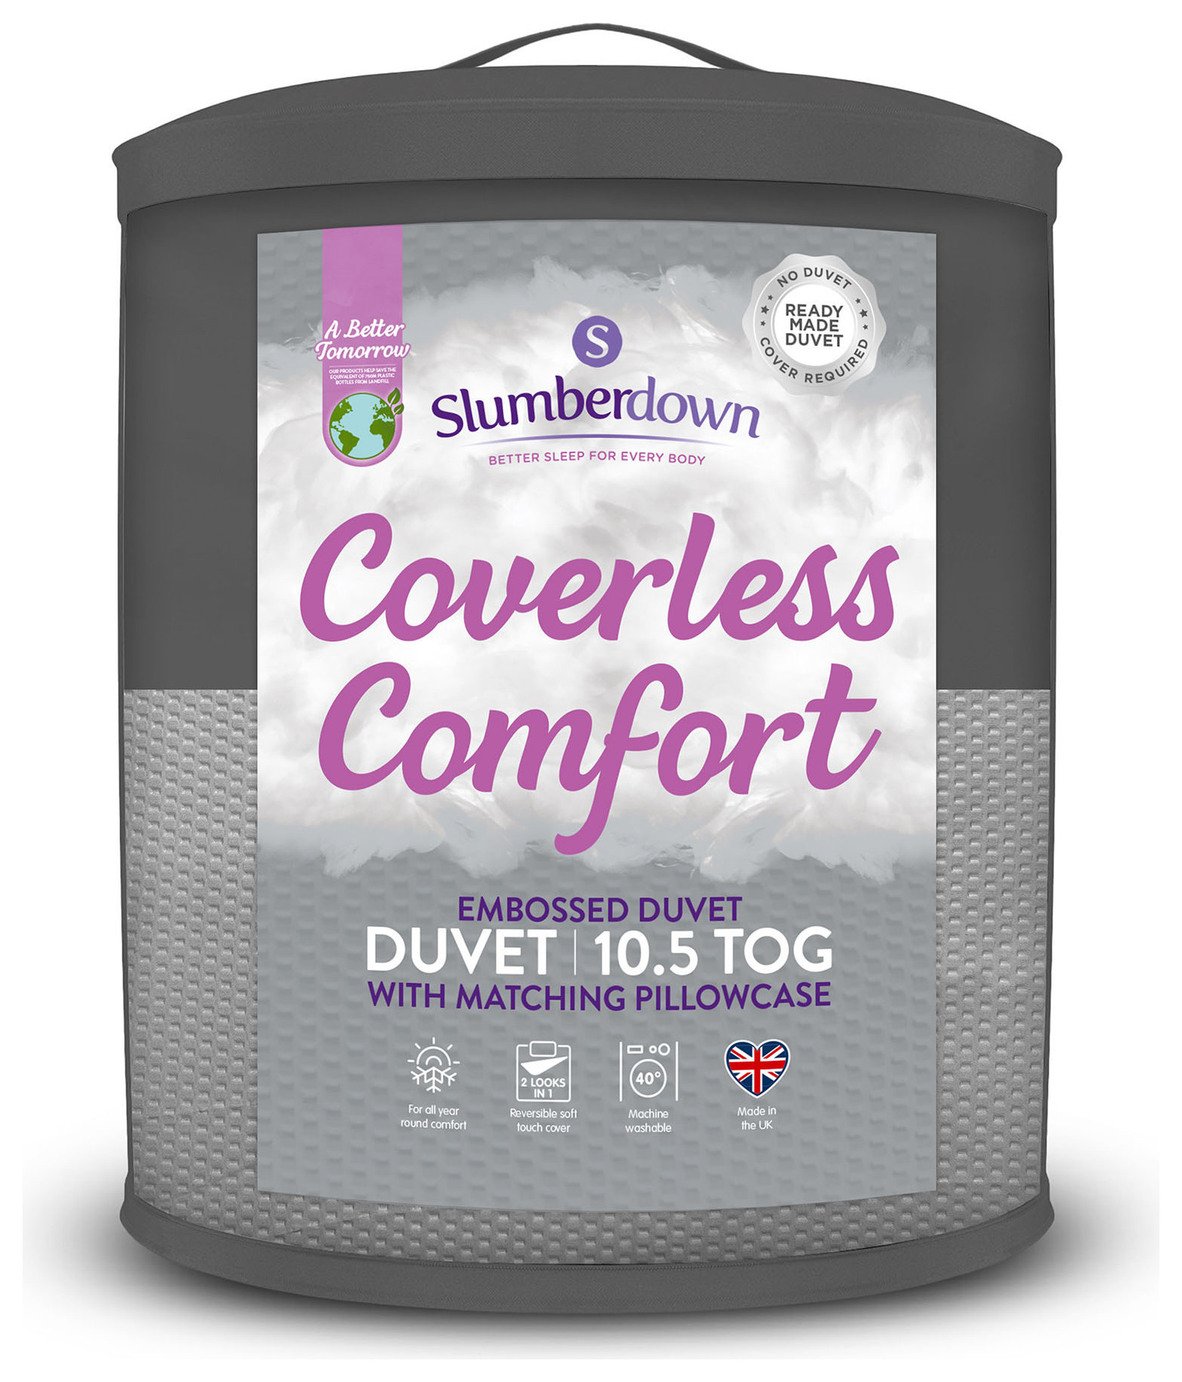 Slumberdown Coverless Comfort 10.5 Tog Duvet - King size